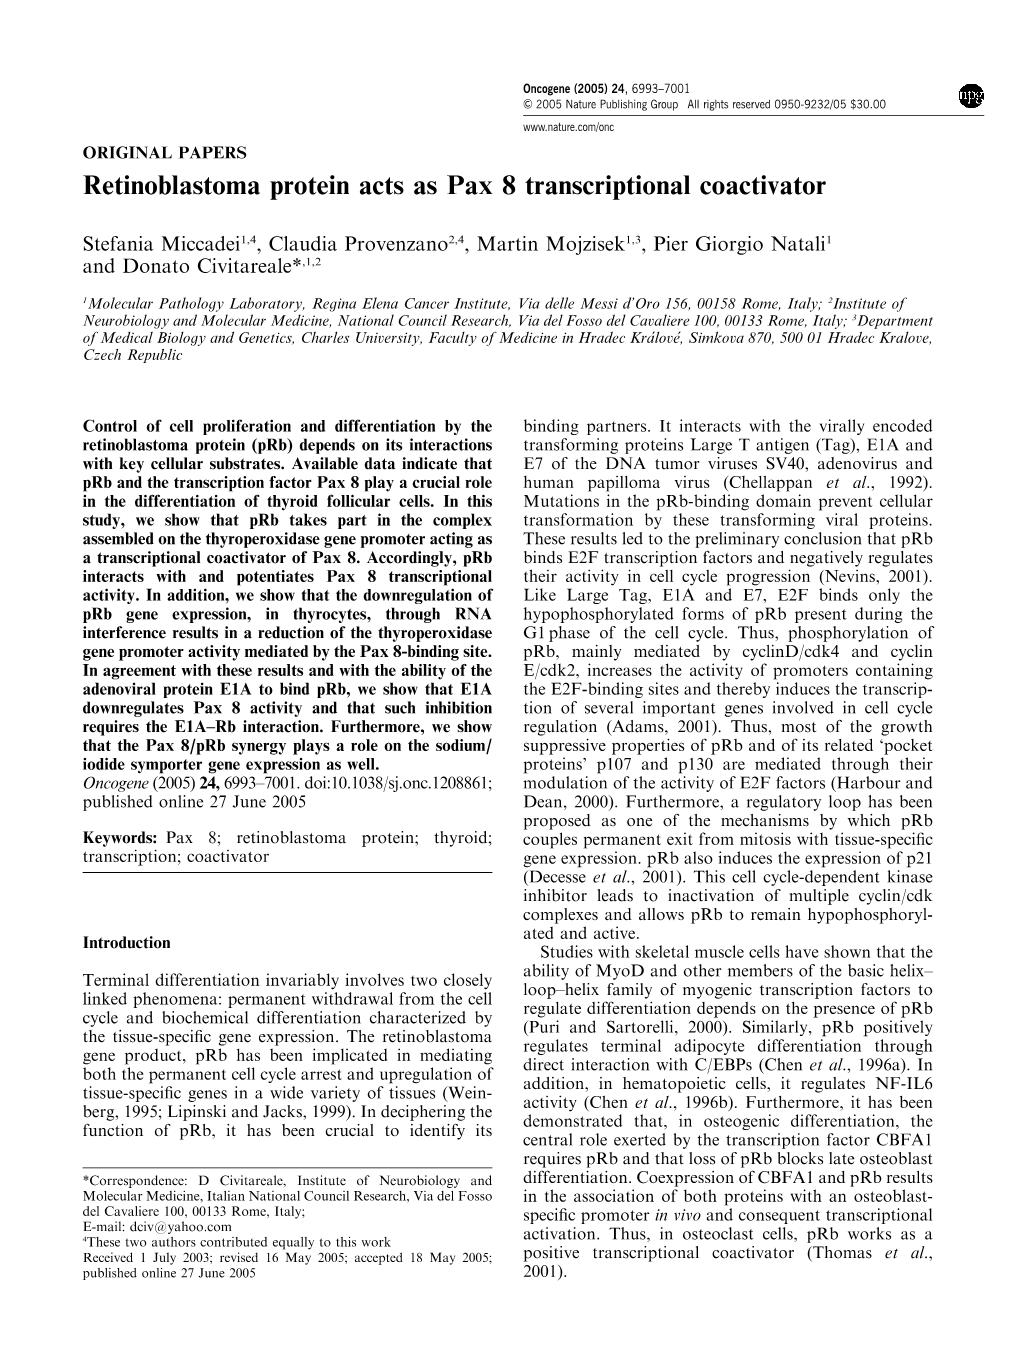 Retinoblastoma Protein Acts As Pax 8 Transcriptional Coactivator